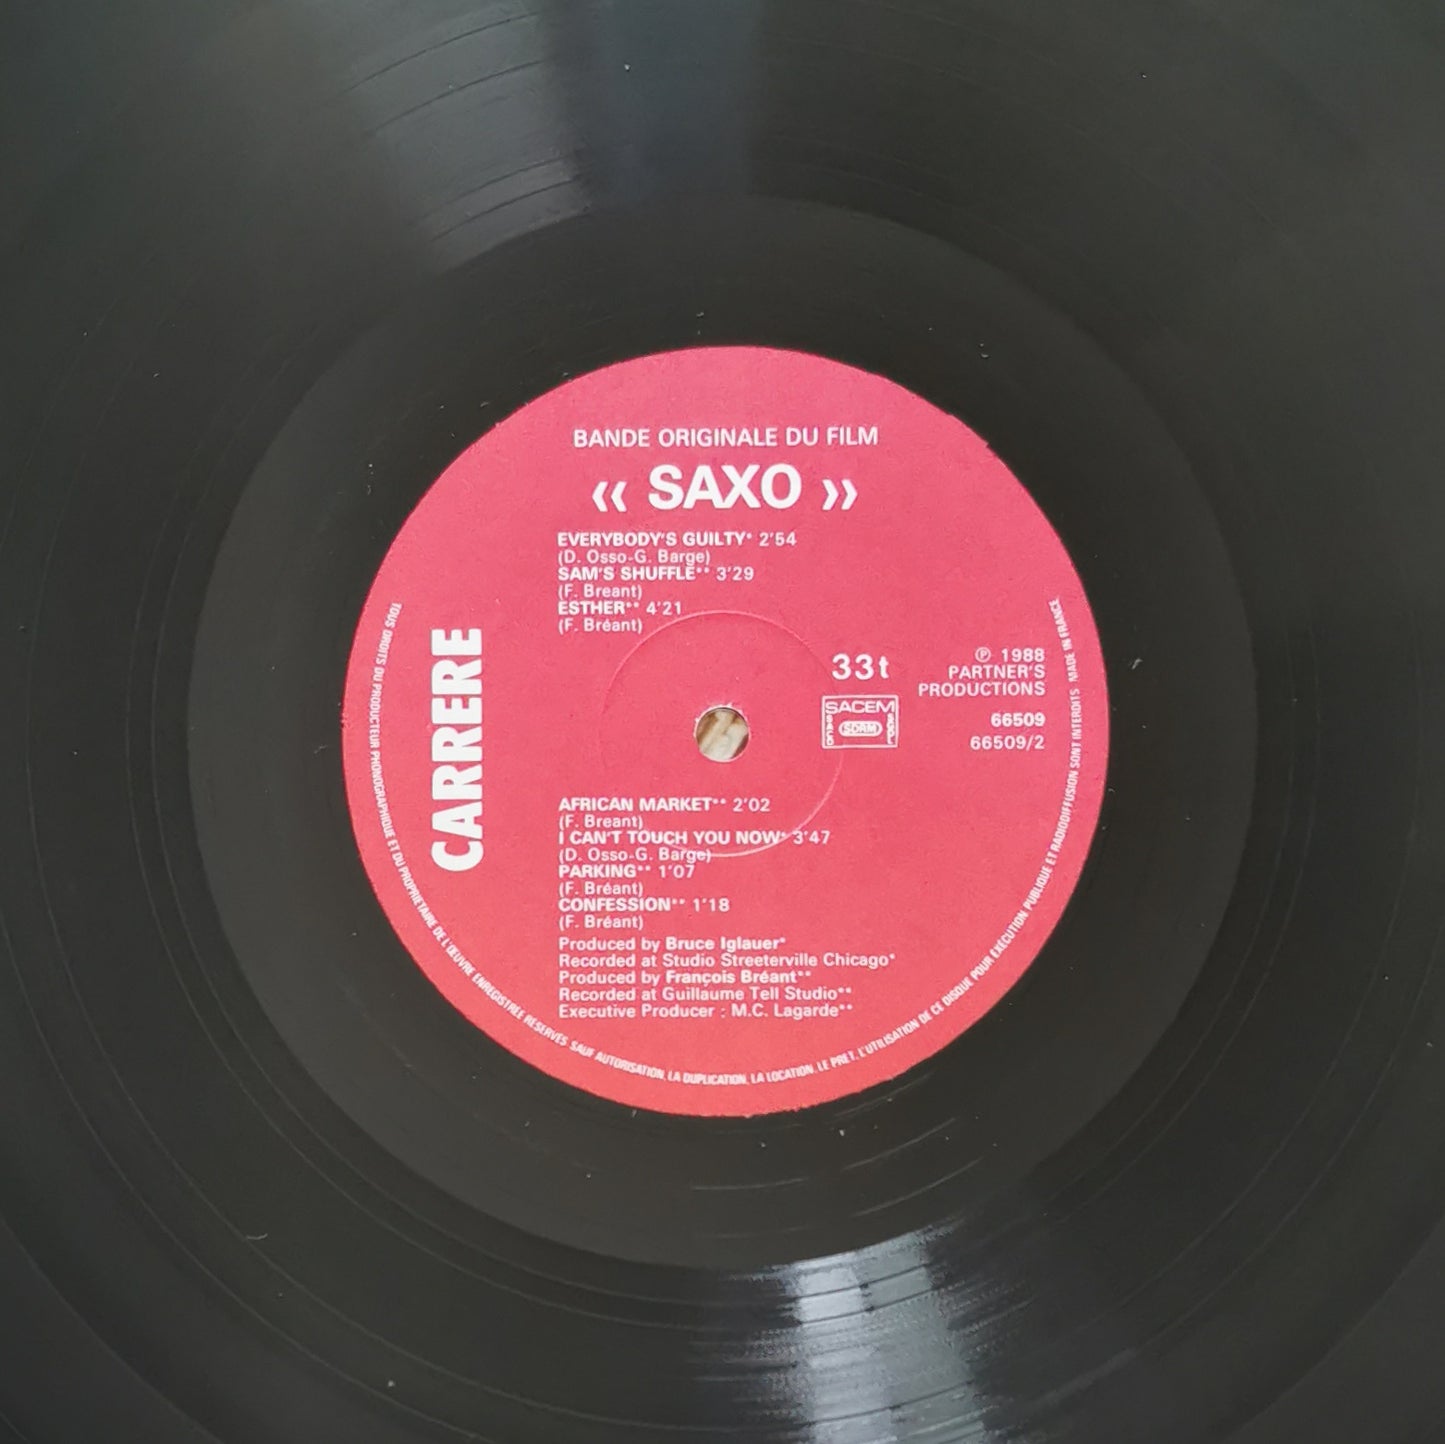 SAXO - Bande Originale Du Film "Saxo"